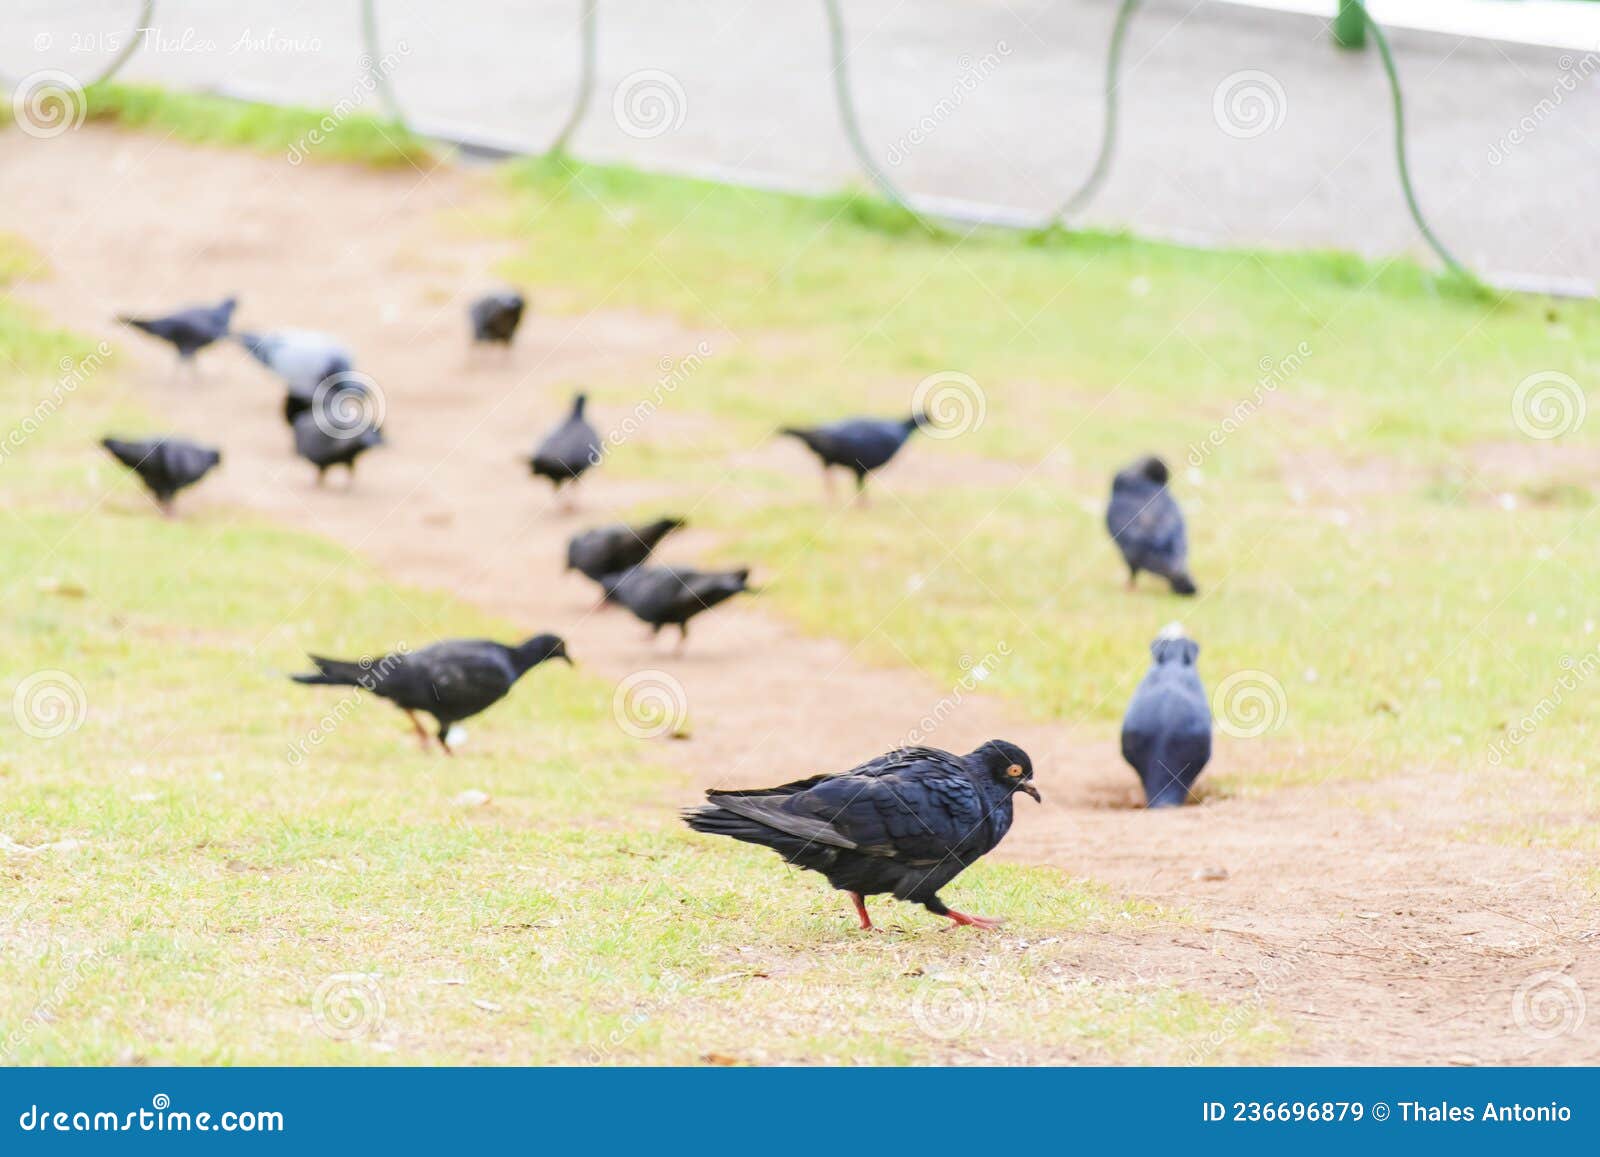 black and gray pigeons feeding on the garden floor